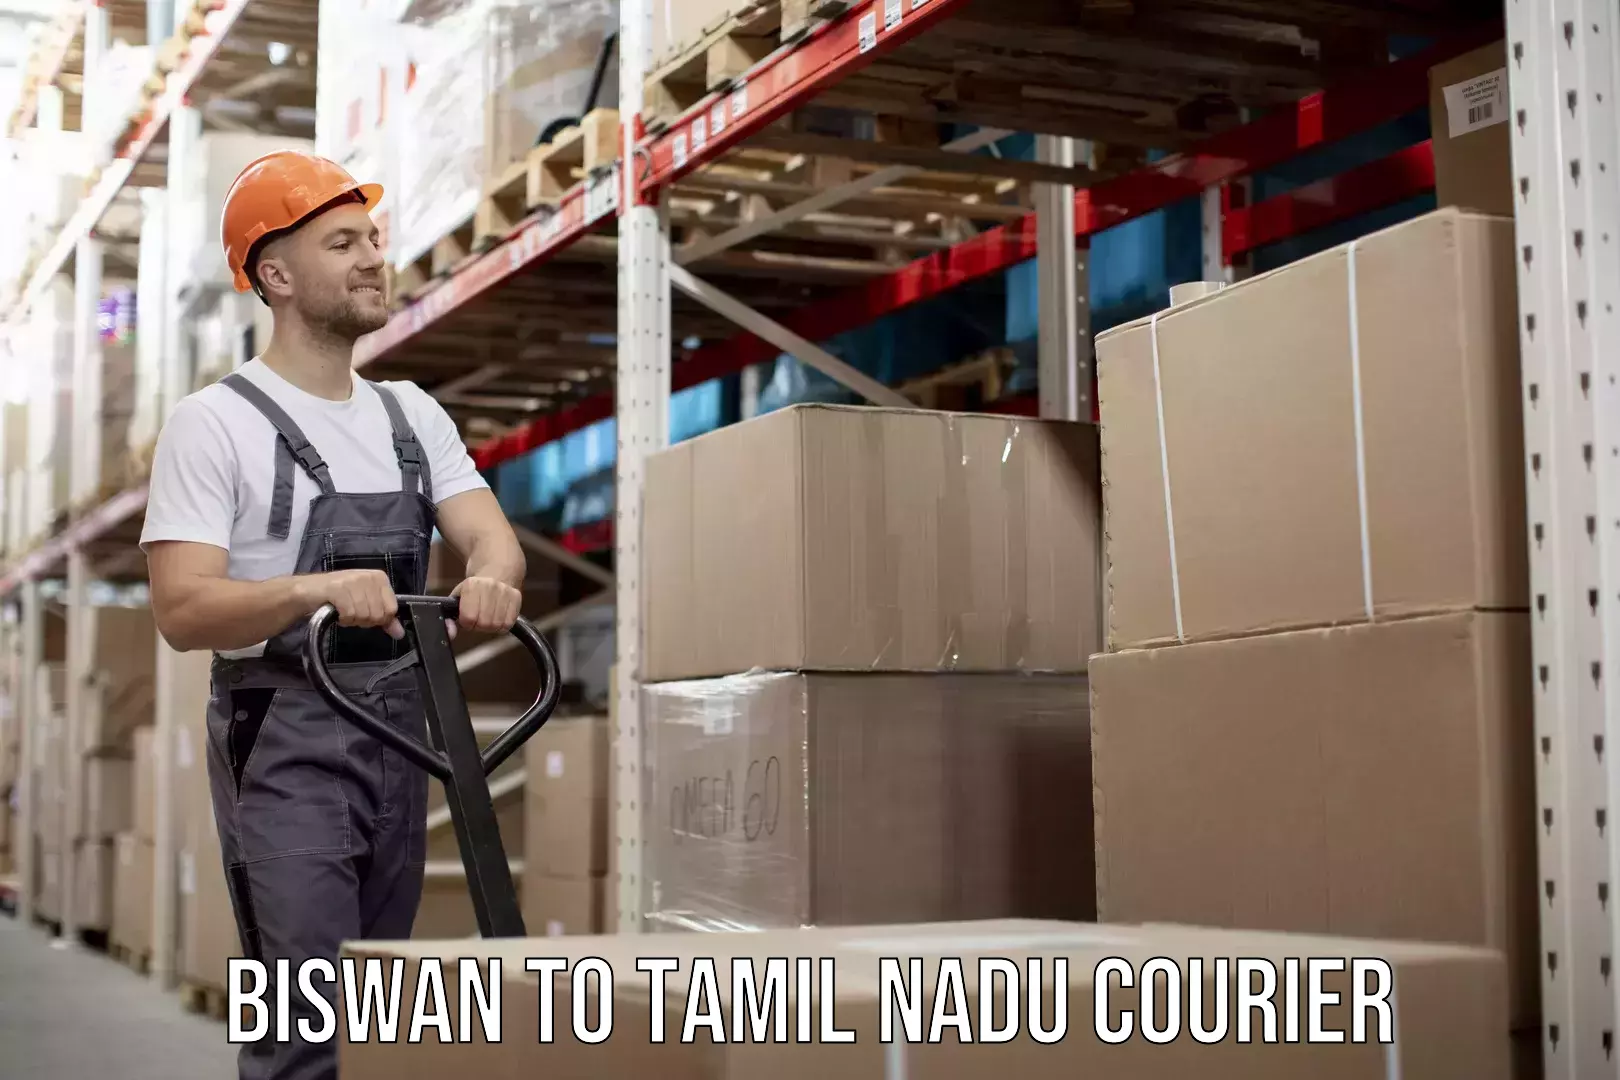 Cargo delivery service Biswan to Tamil Nadu